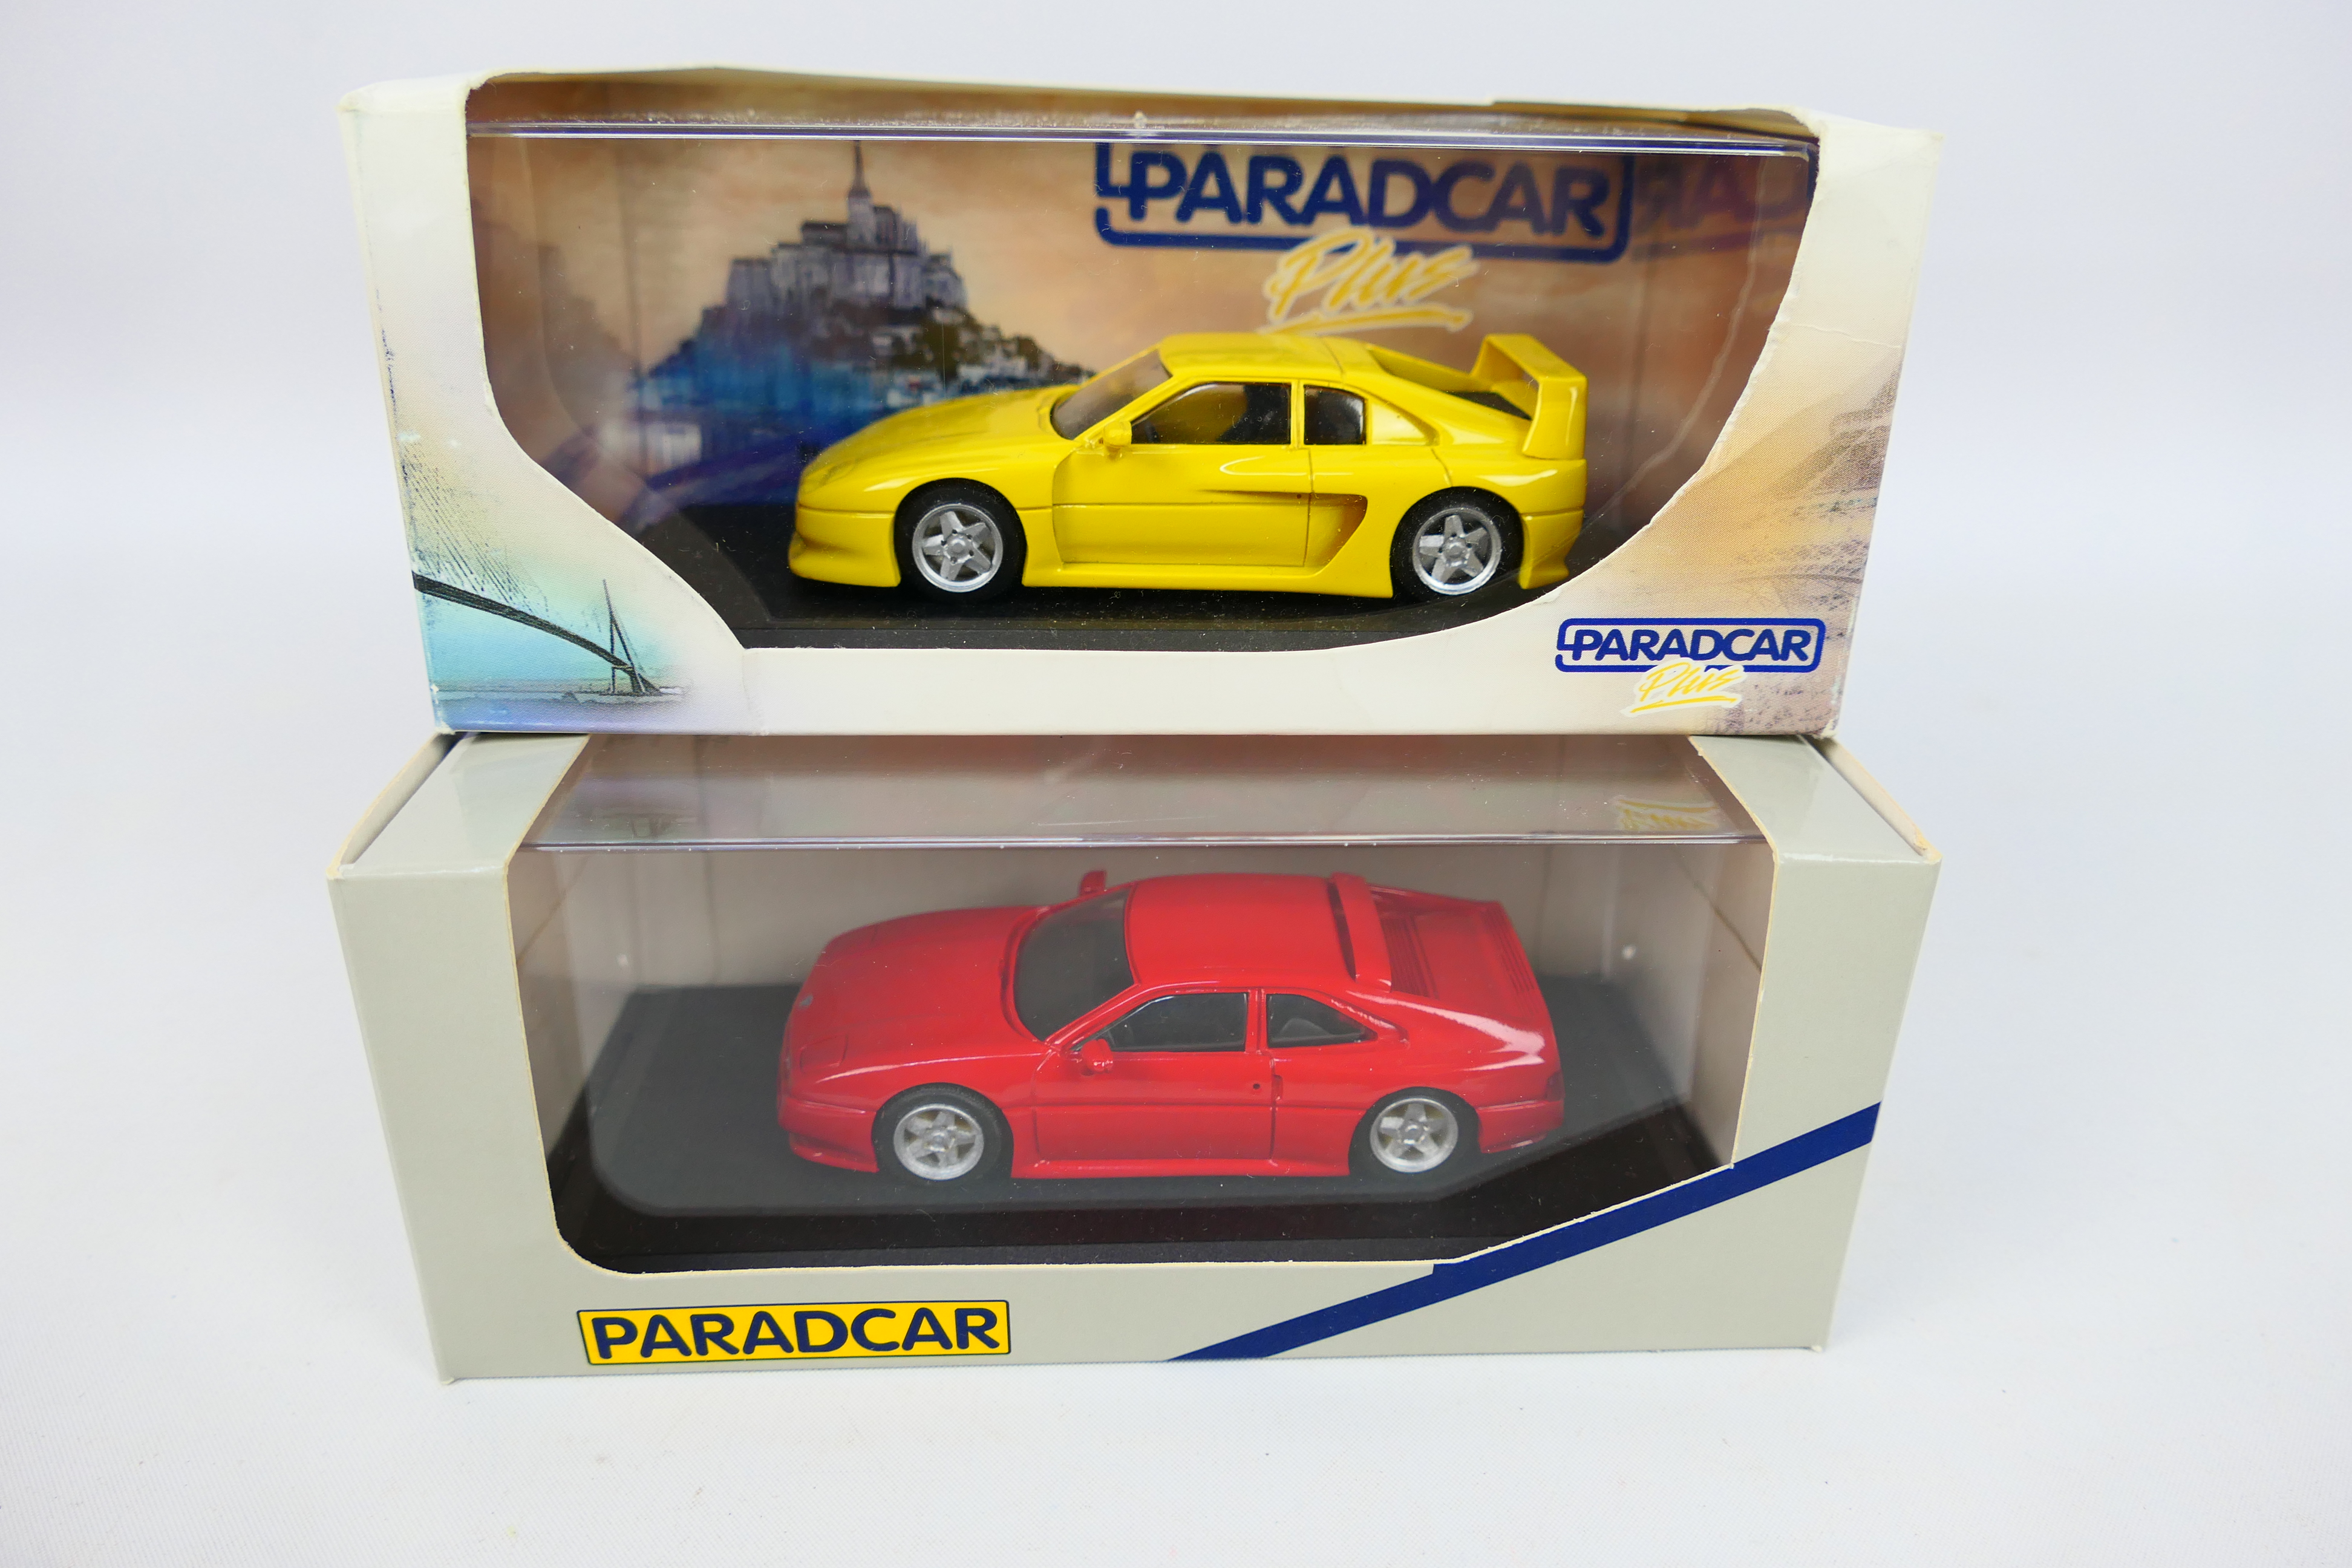 Paradcar - 2 x rare French Venturi models in 1:43 scale resin,